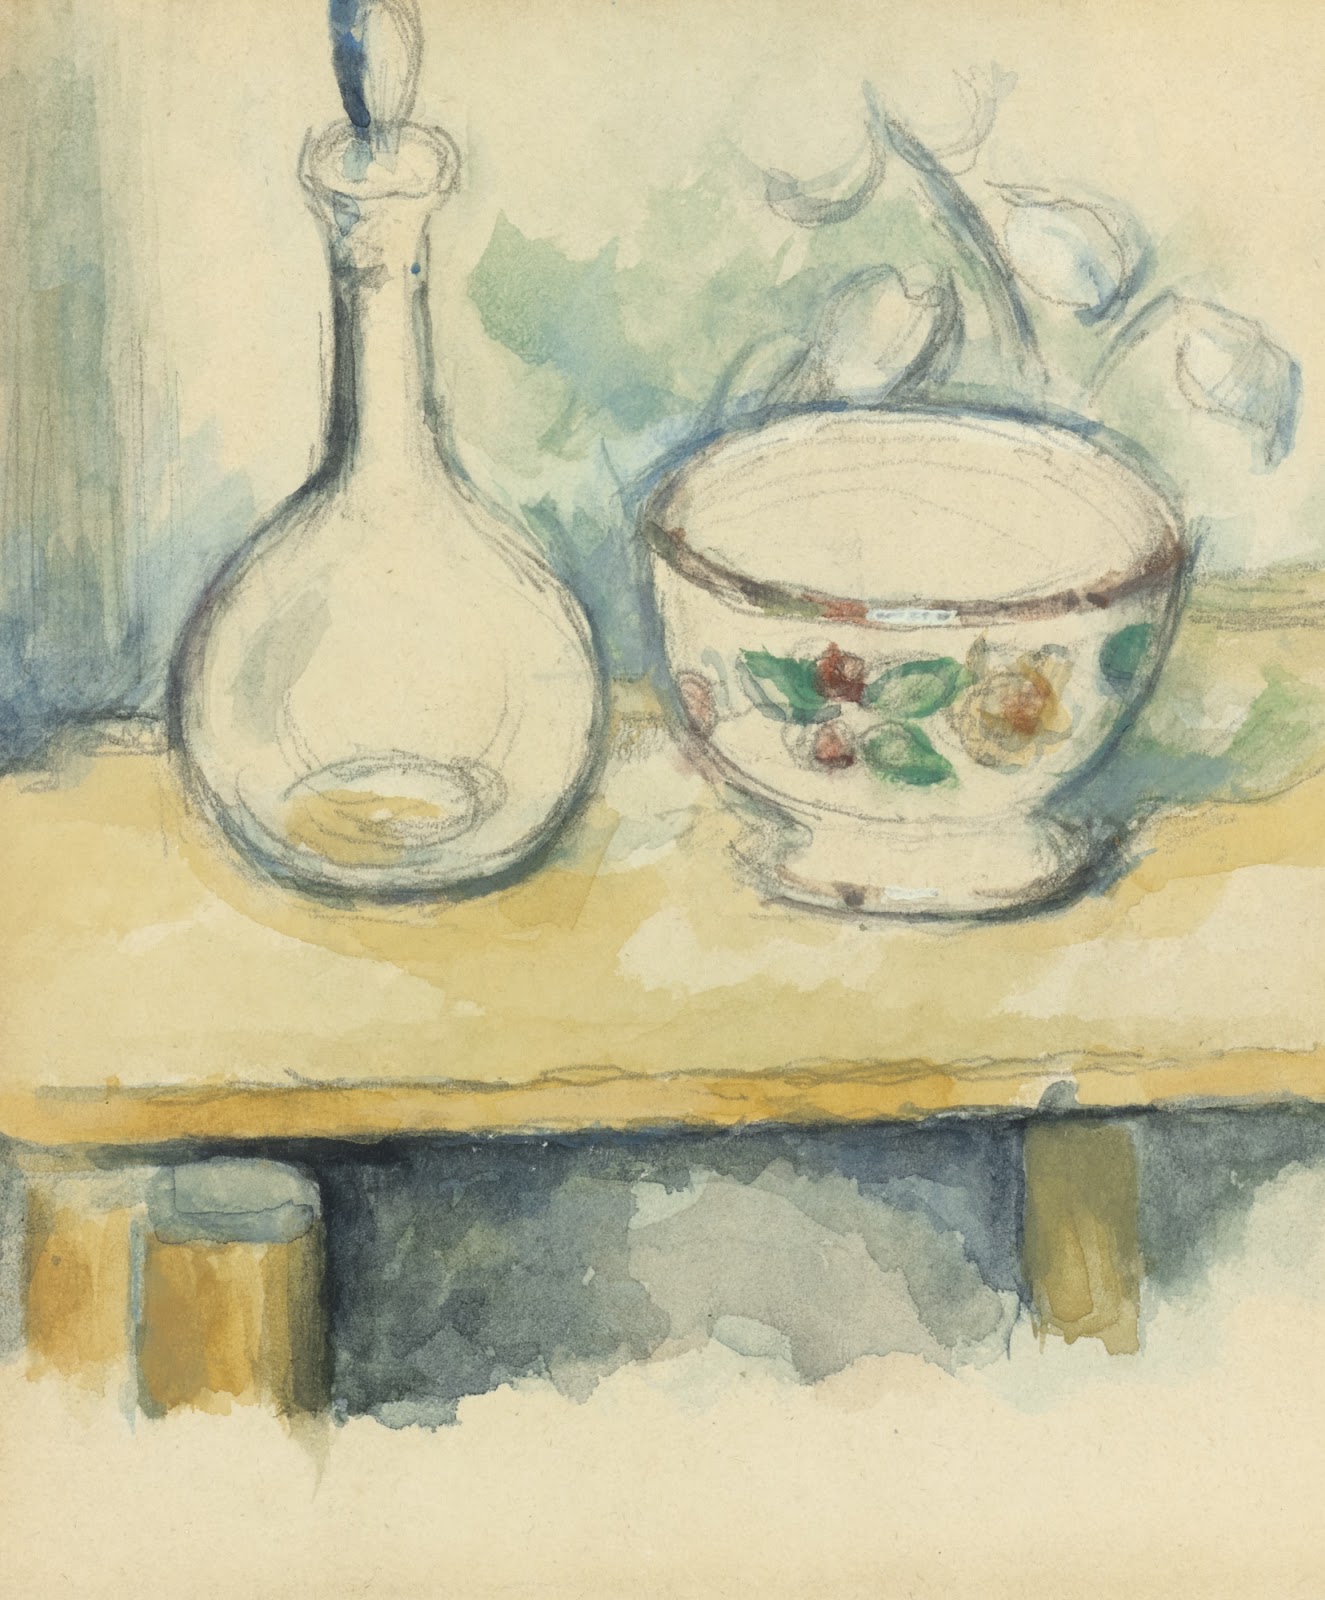 Paul+Cezanne-1839-1906 (173).jpg